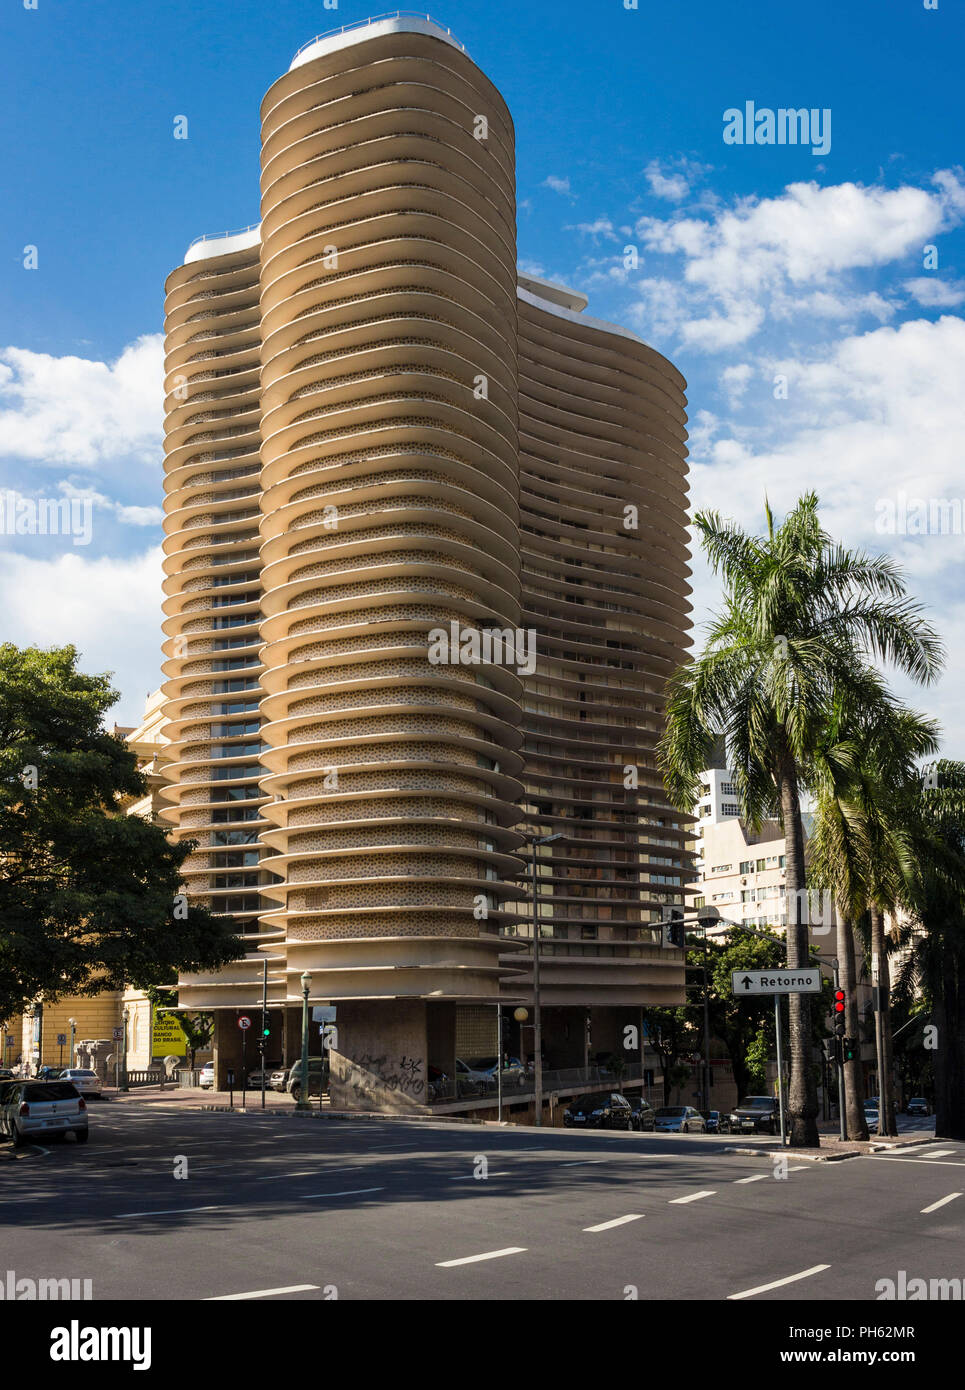 Edificio Niemeyer, at the city of Belo Horizonte, Brazil - Designed by architect Oscar Niemeyer. Stock Photo